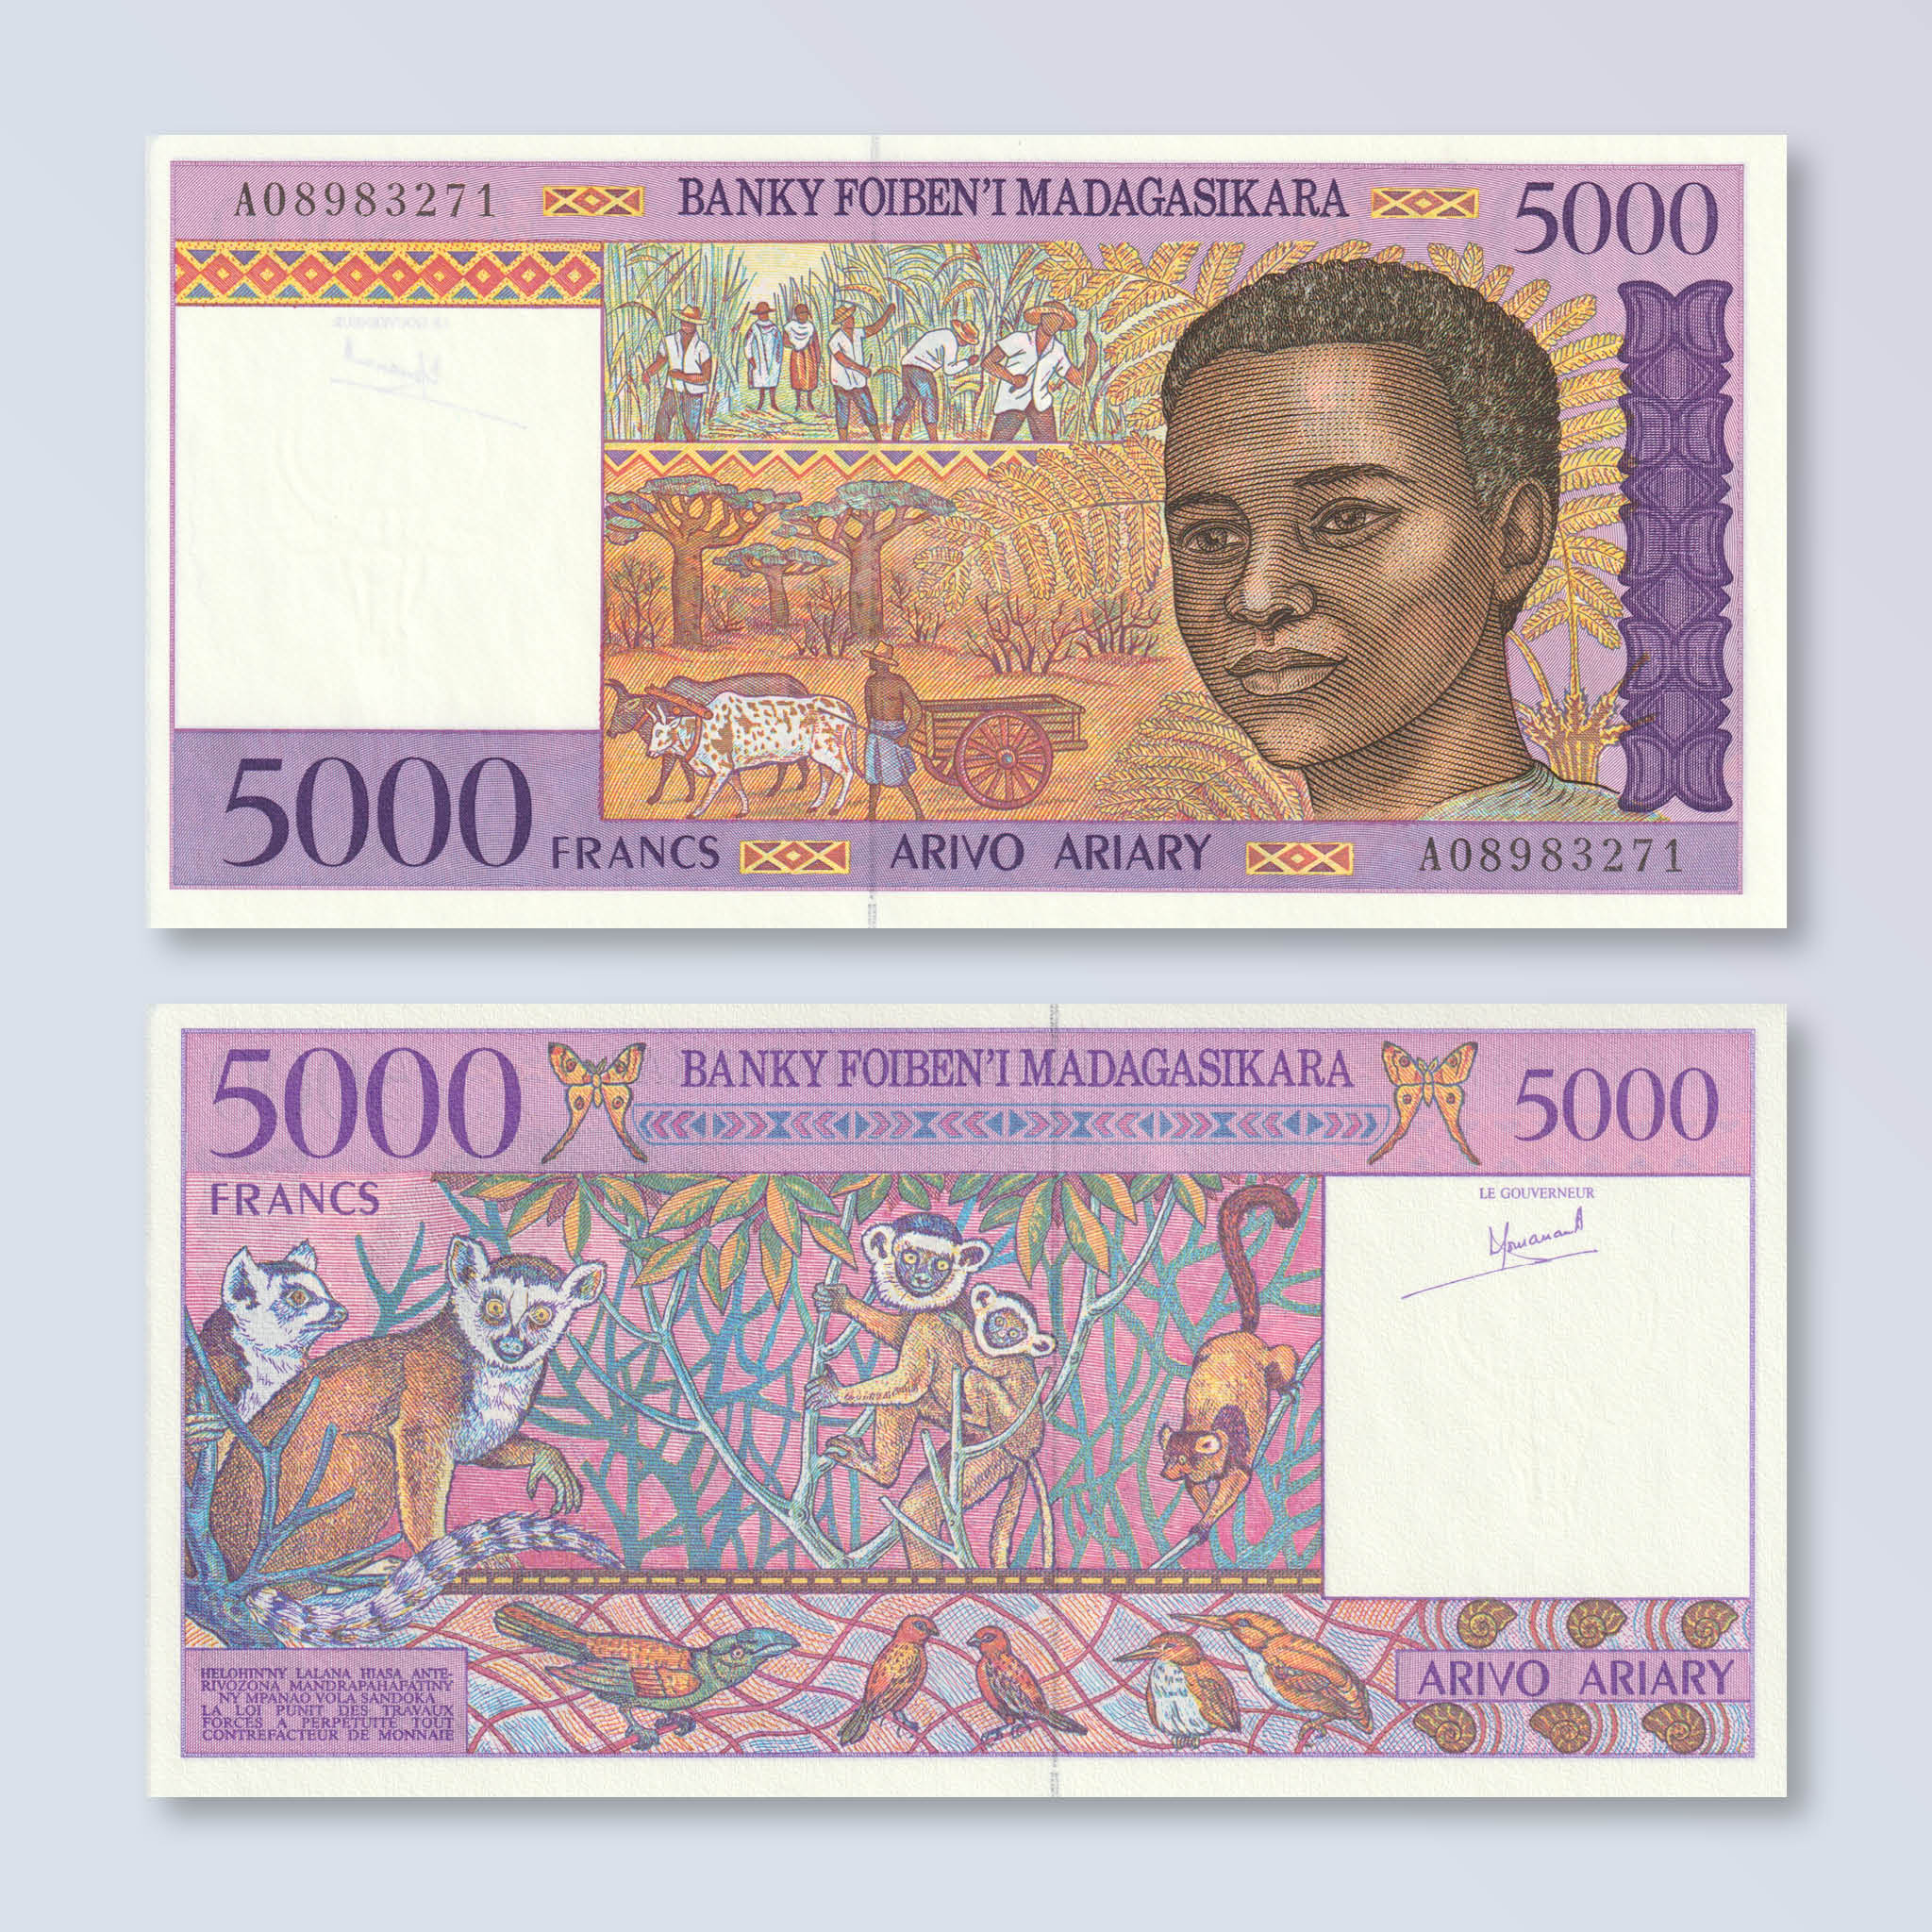 Madagascar 5000 Francs, 1995, B314a, P78a, UNC - Robert's World Money - World Banknotes